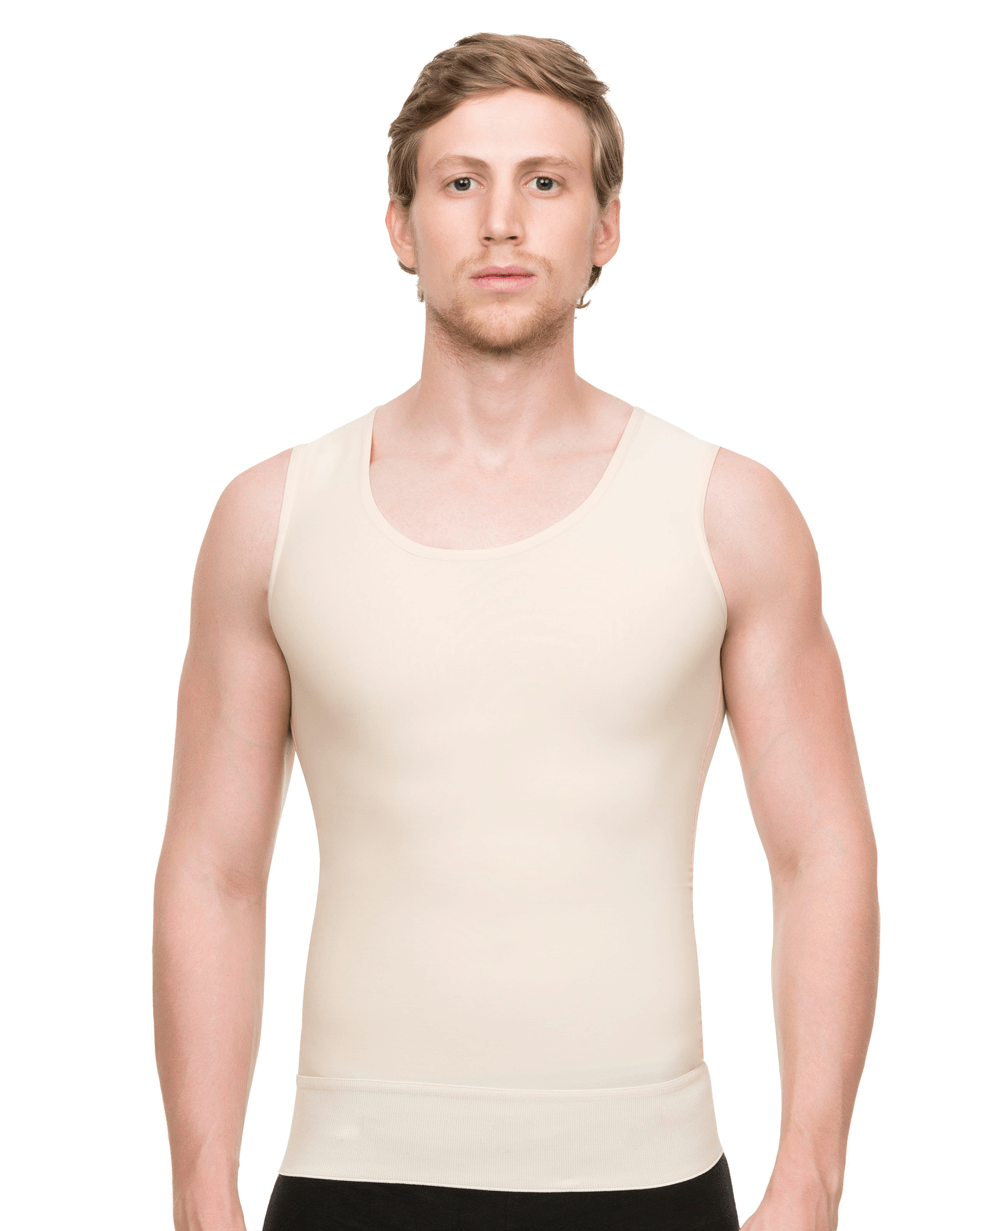 Abdominal vest for men, Post operative vest for men